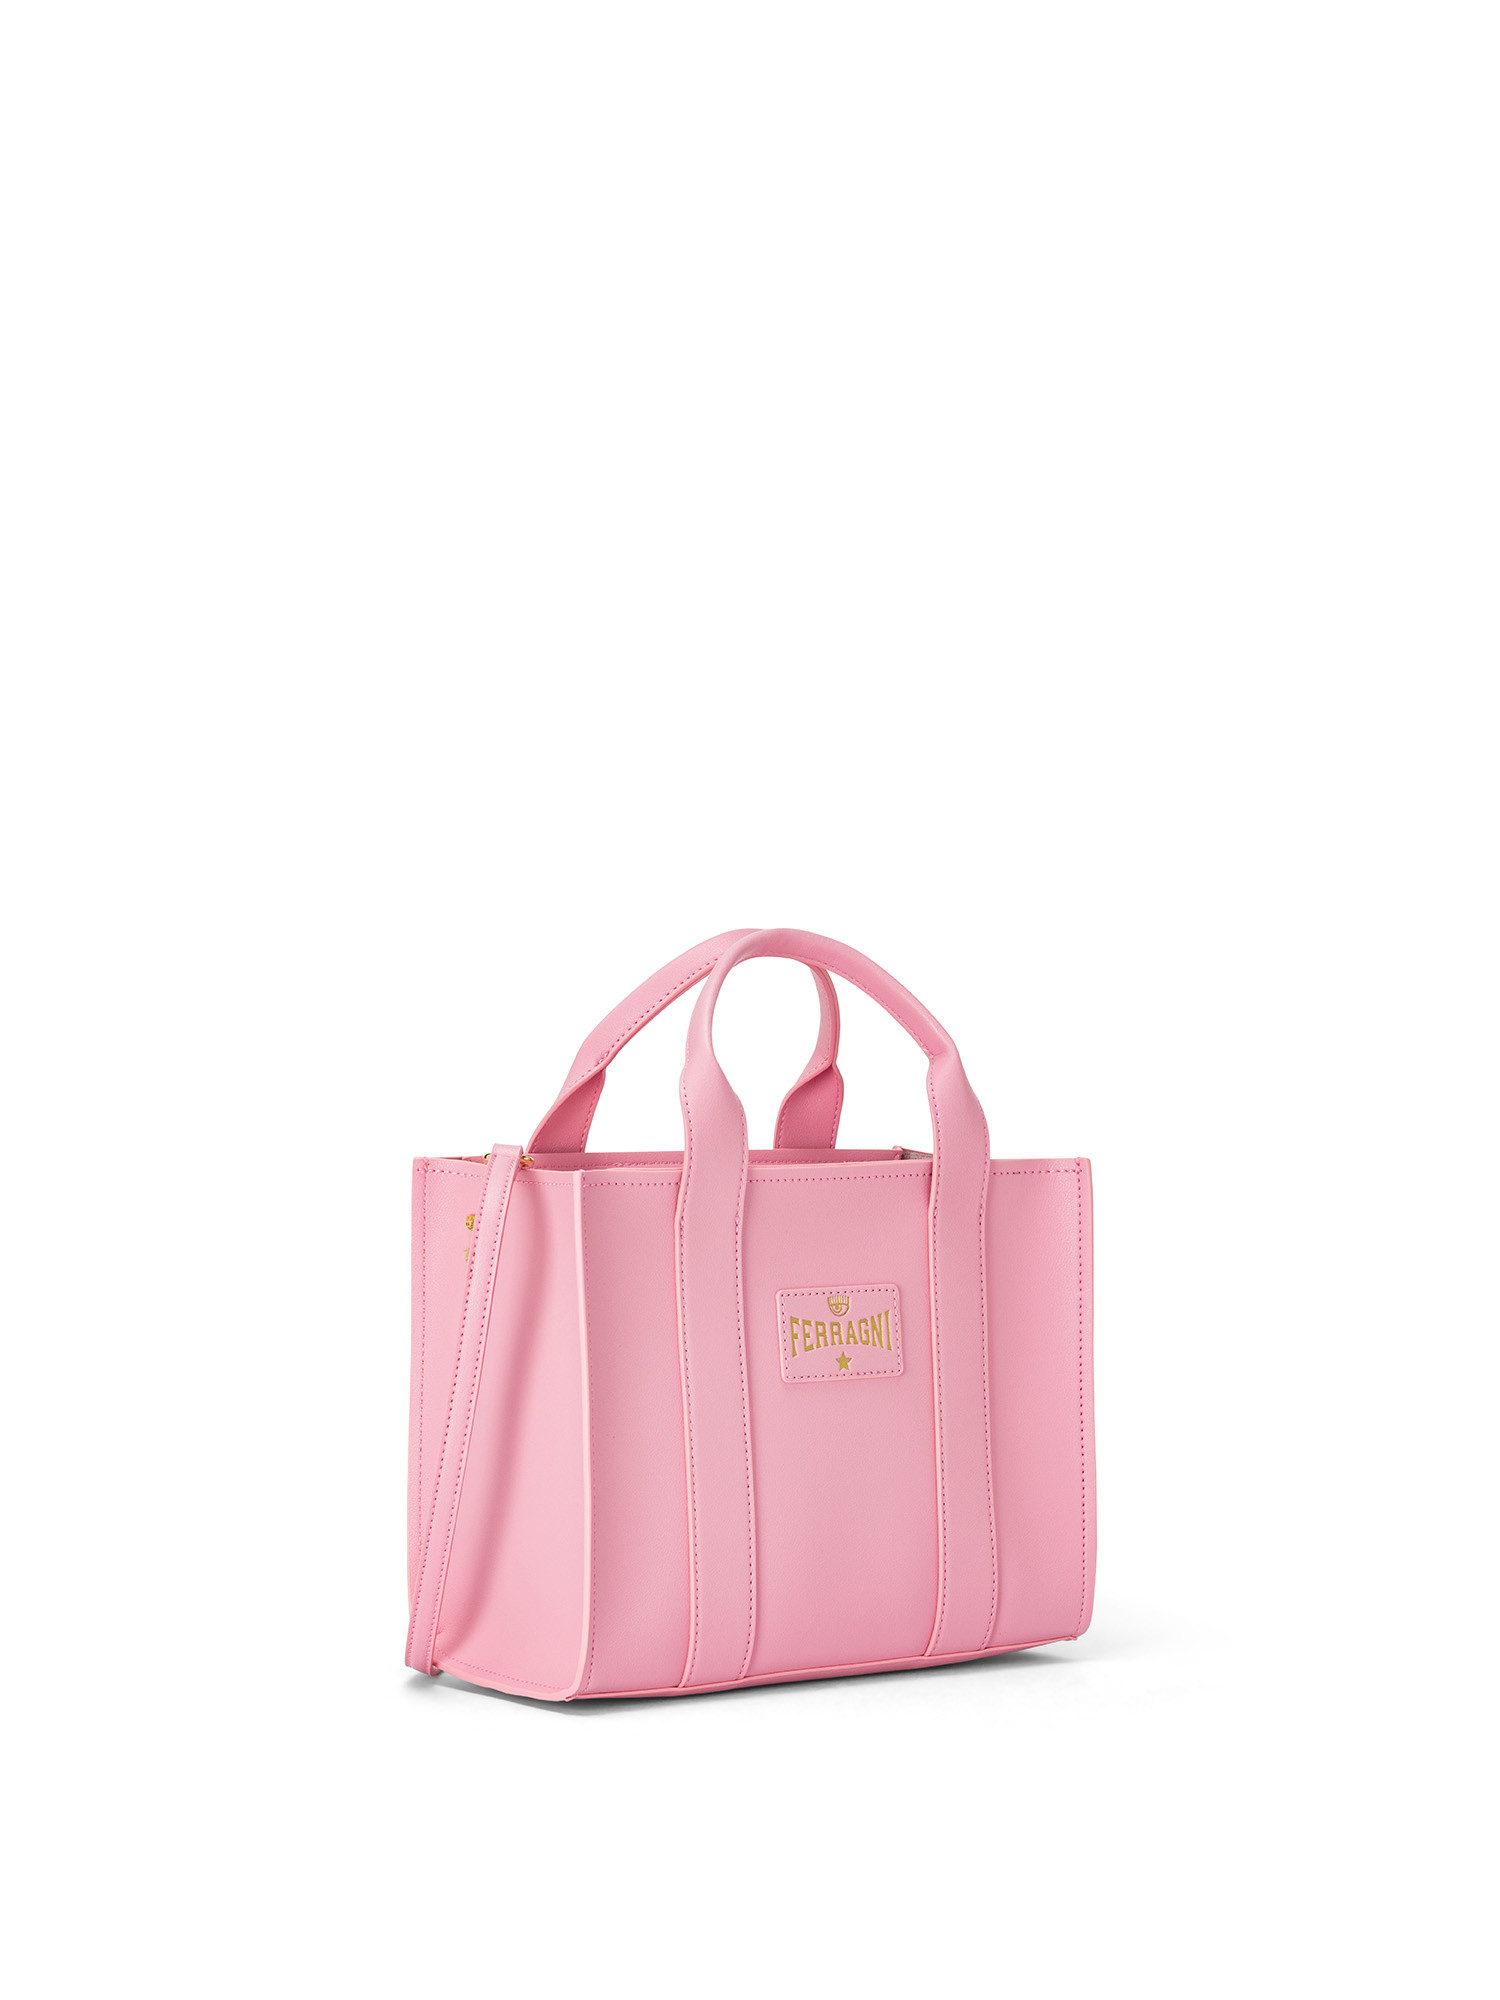 Chiara Ferragni - Shopping bag Range N stretch, Rosa chiaro, large image number 1